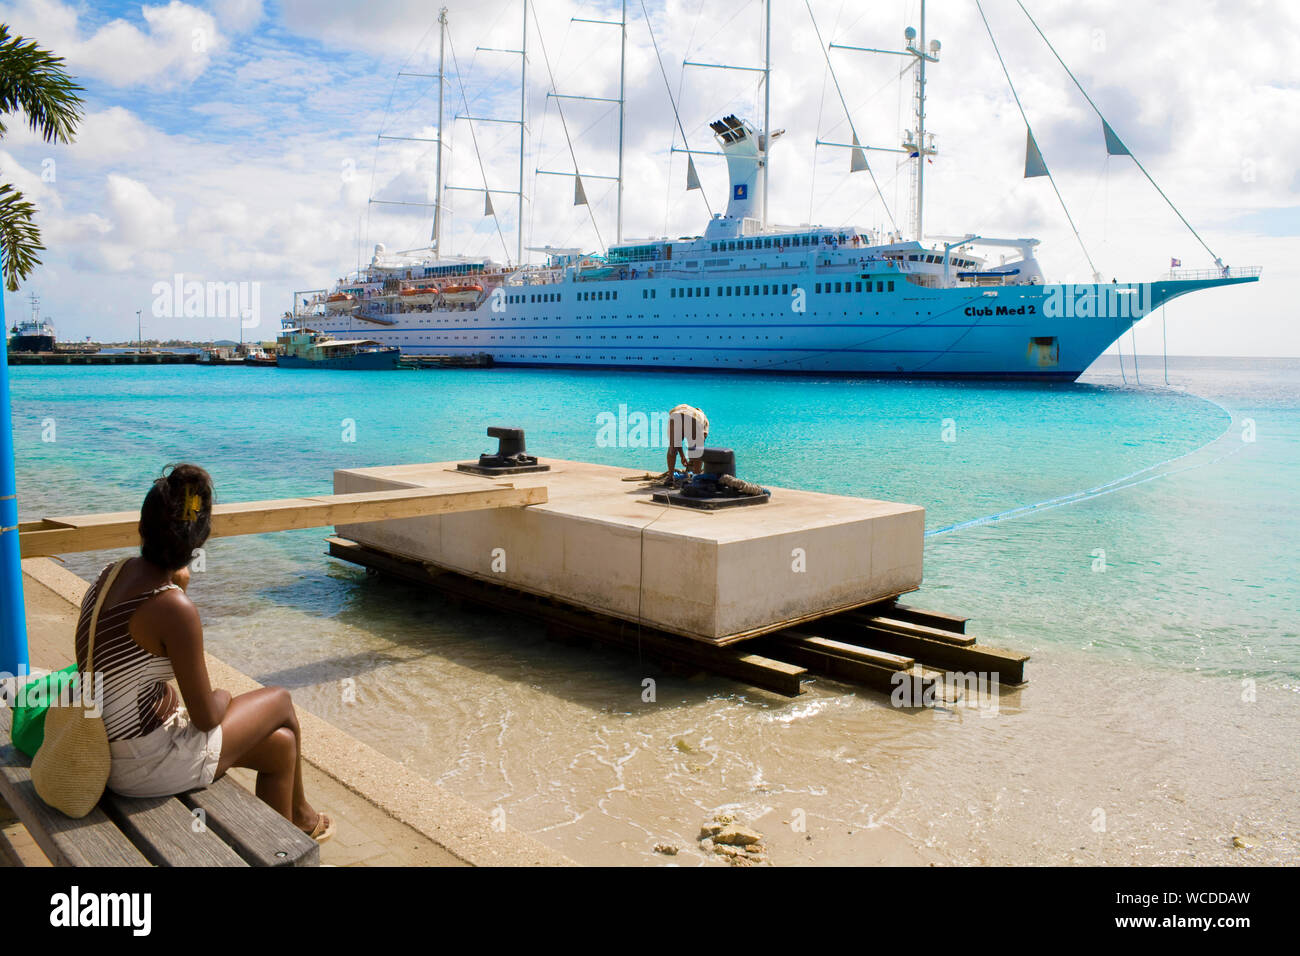 Kreuzfahrtschiff "Club Med 2" in Kralendijk, Bonaire, Niederländische Antillen Stockfoto